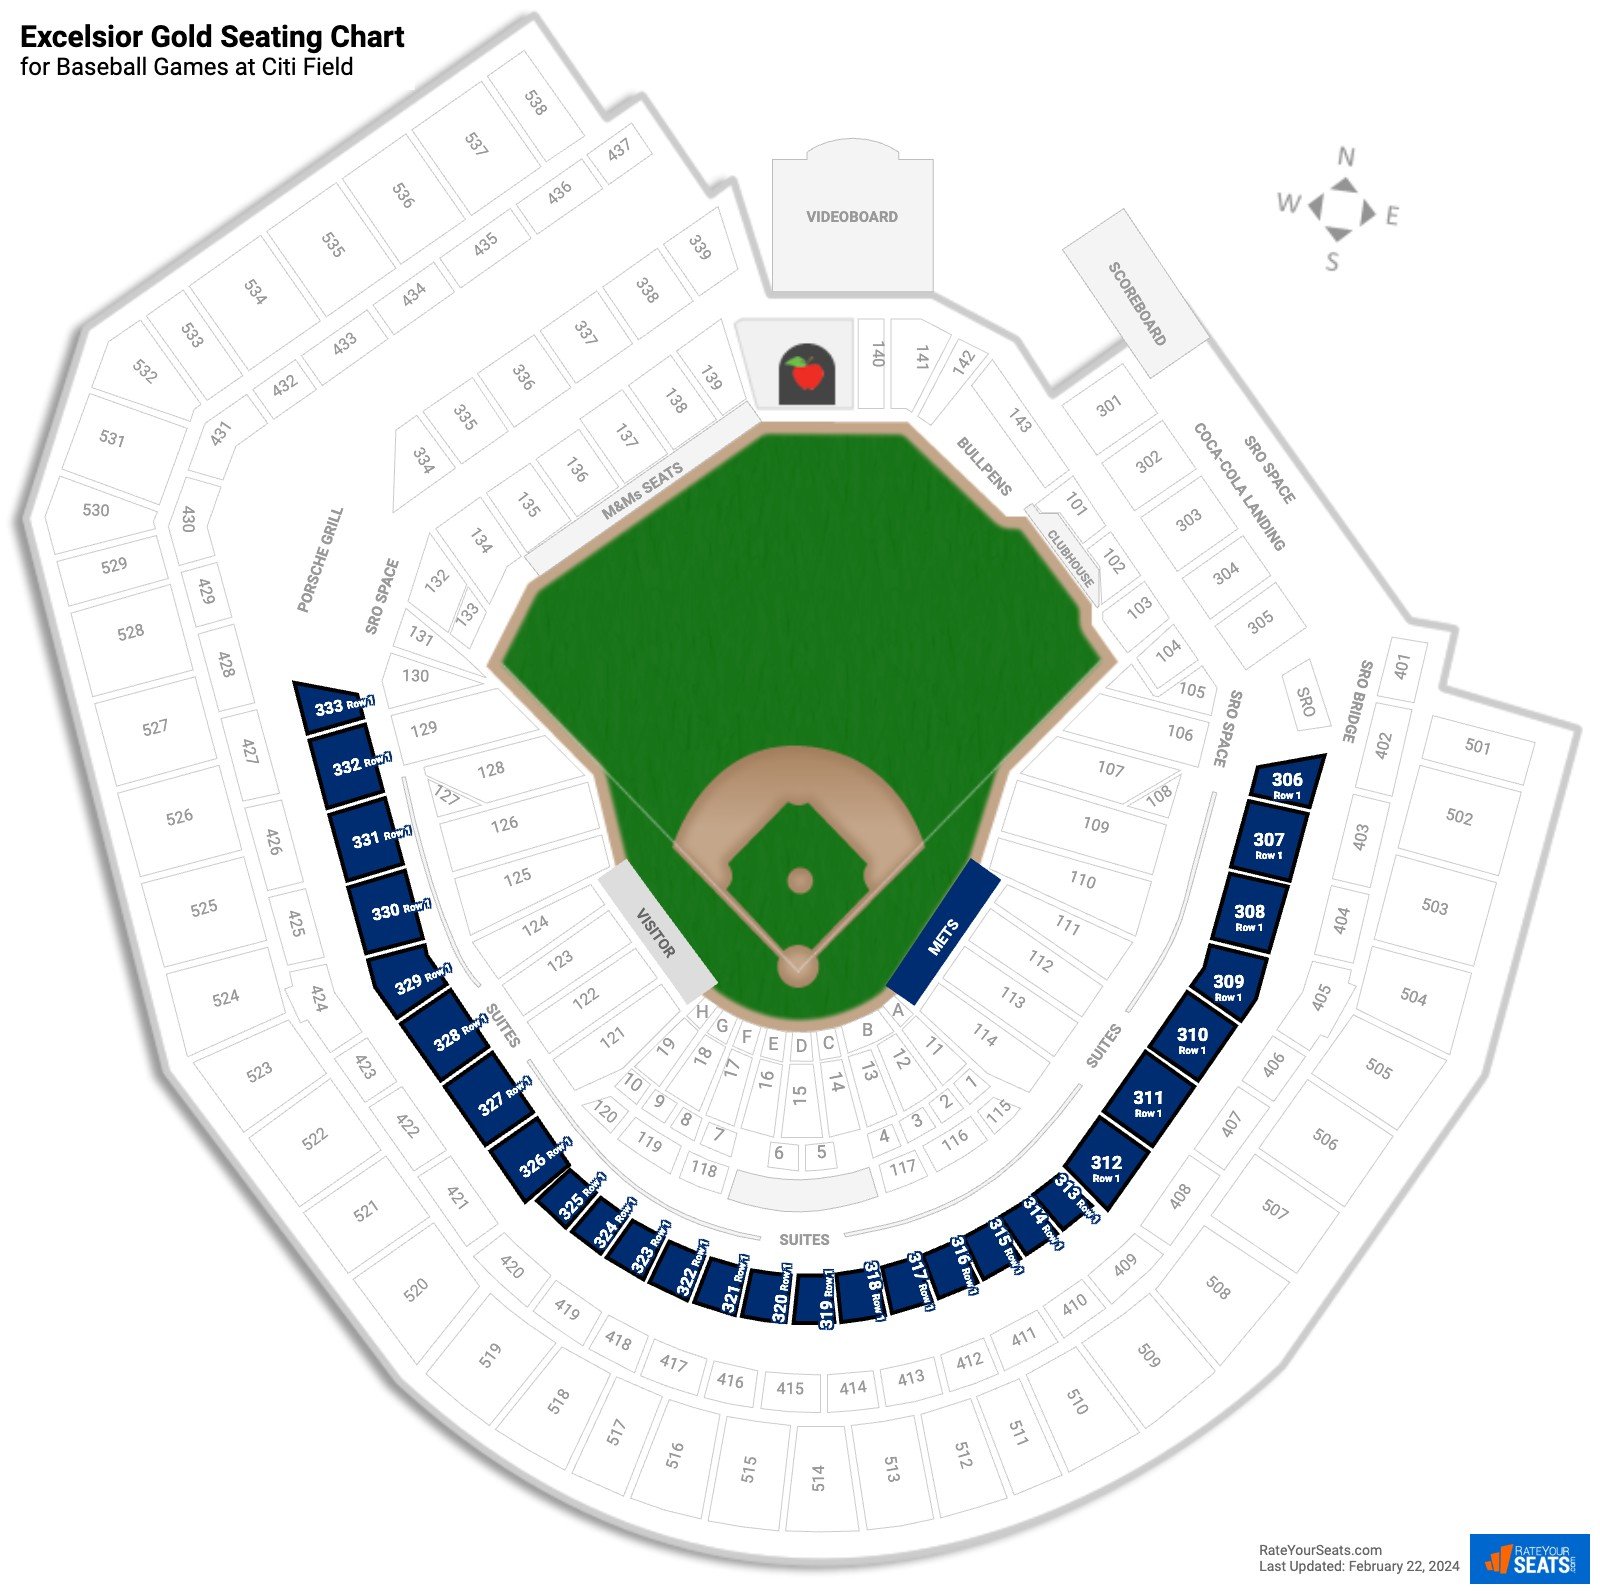 Baseball Excelsior Gold Seating Chart at Citi Field